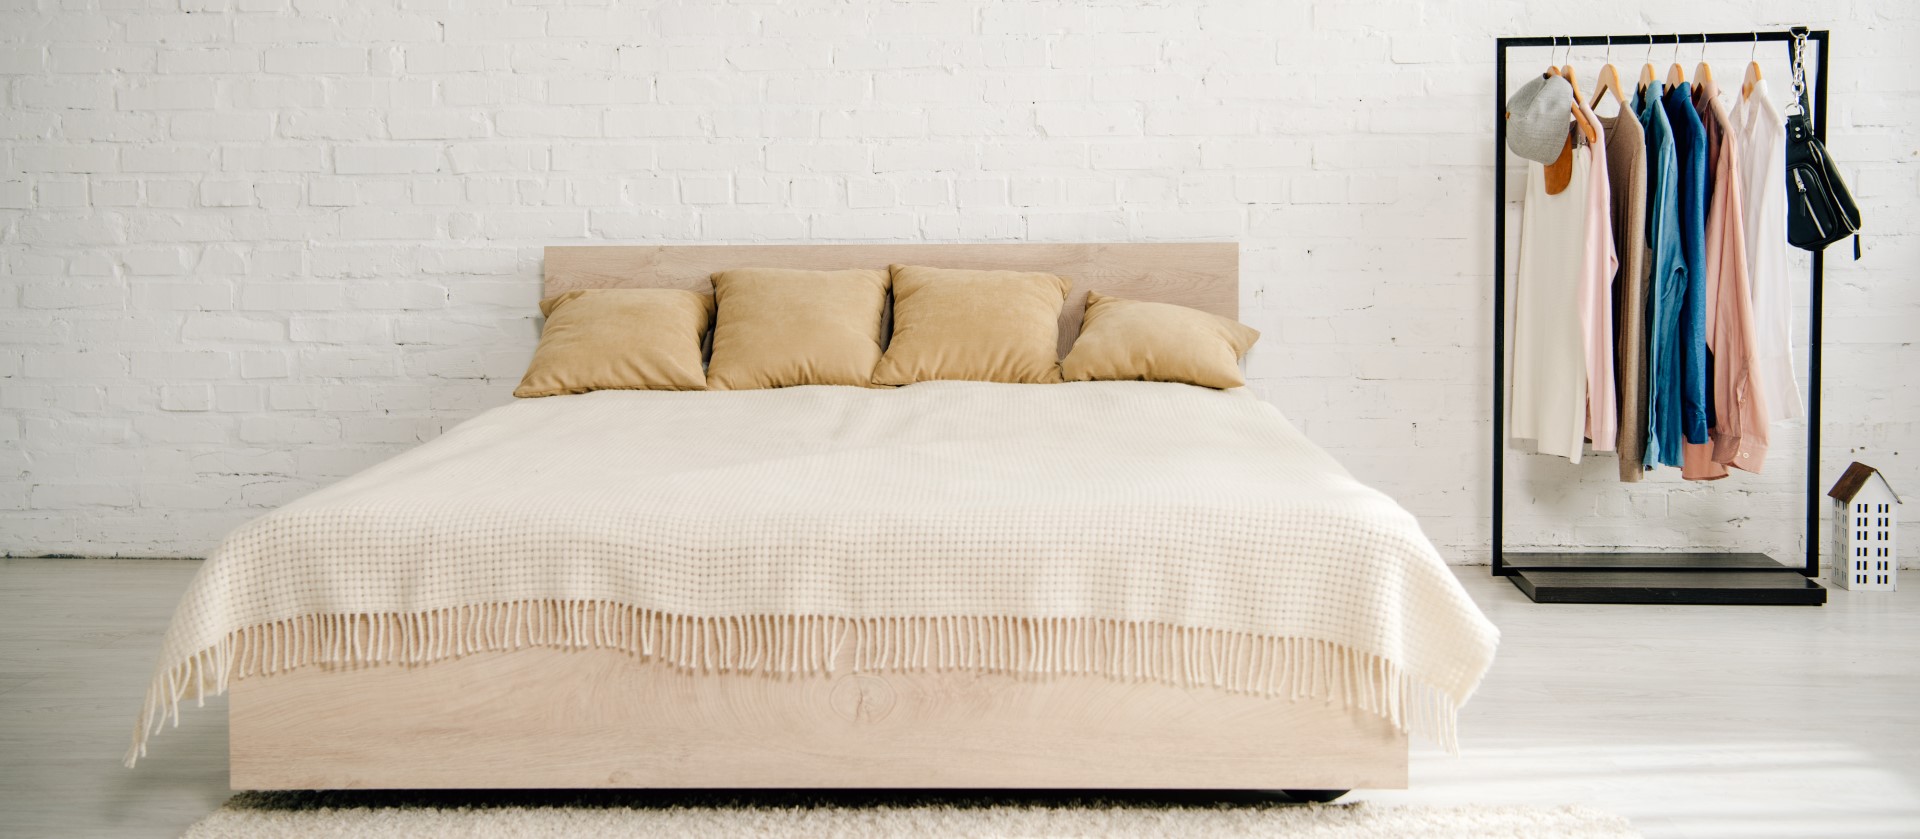 Big Bed With Cushions And Blanket In Teenage Bedro 2023 11 27 05 17 30 Utc